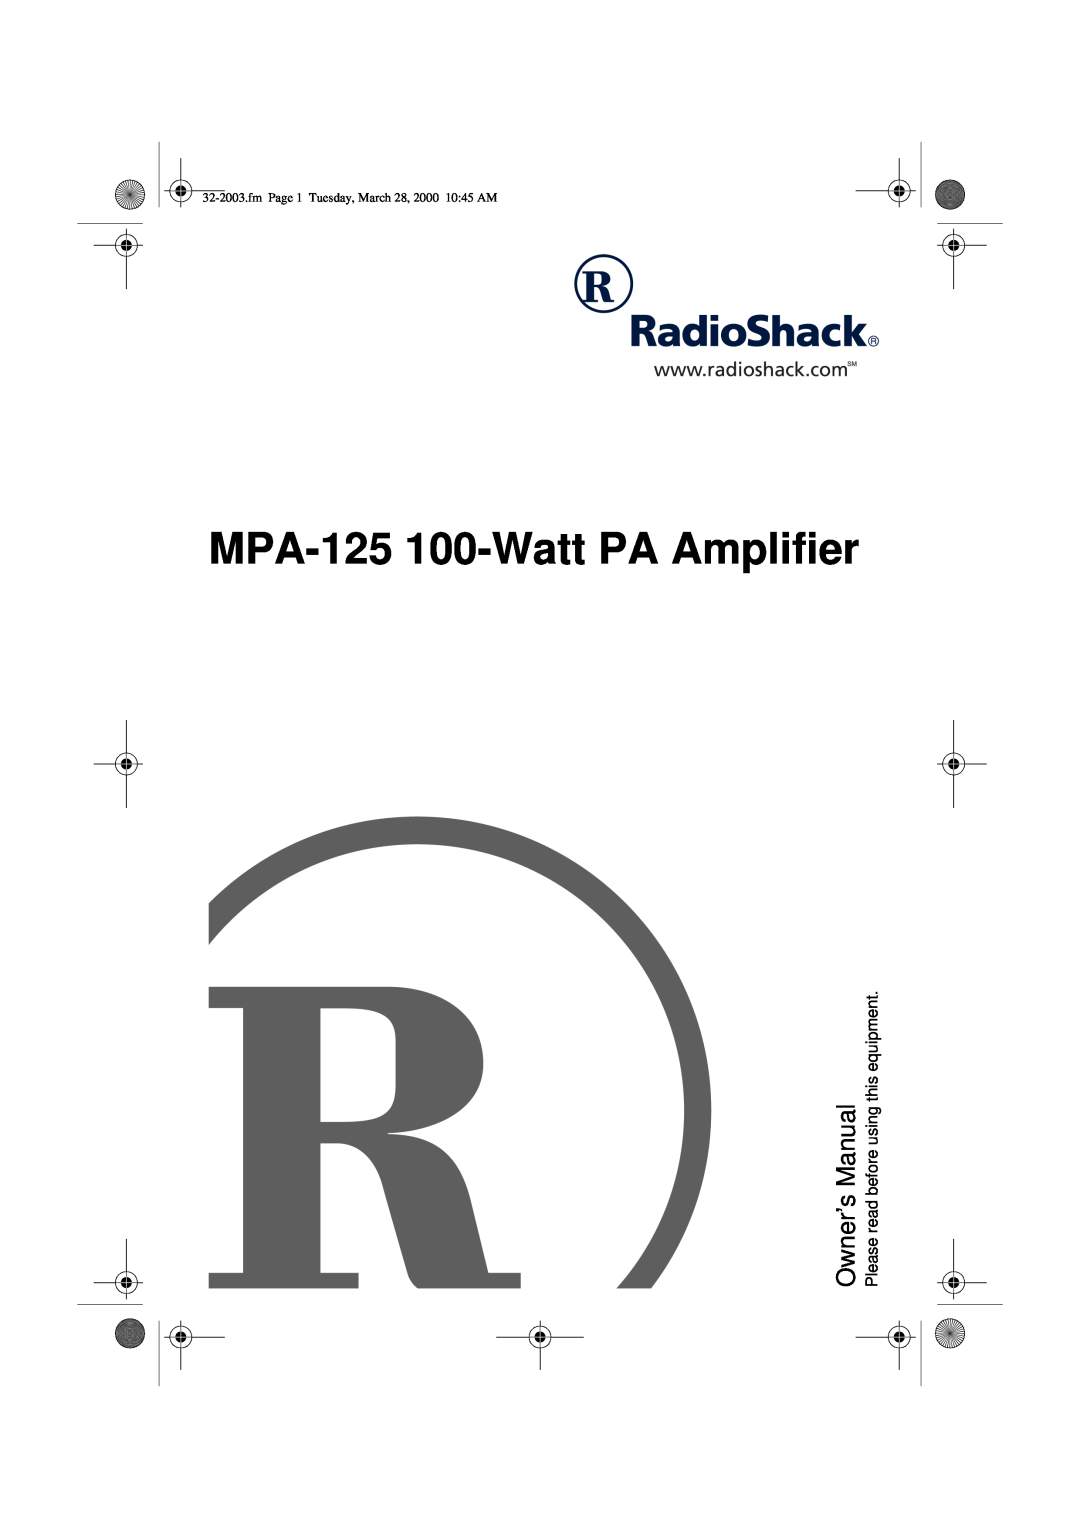 Radio Shack owner manual MPA-125 100-WattPA Amplifier, fmPage 1 Tuesday, March 28, 2000 10 45 AM 